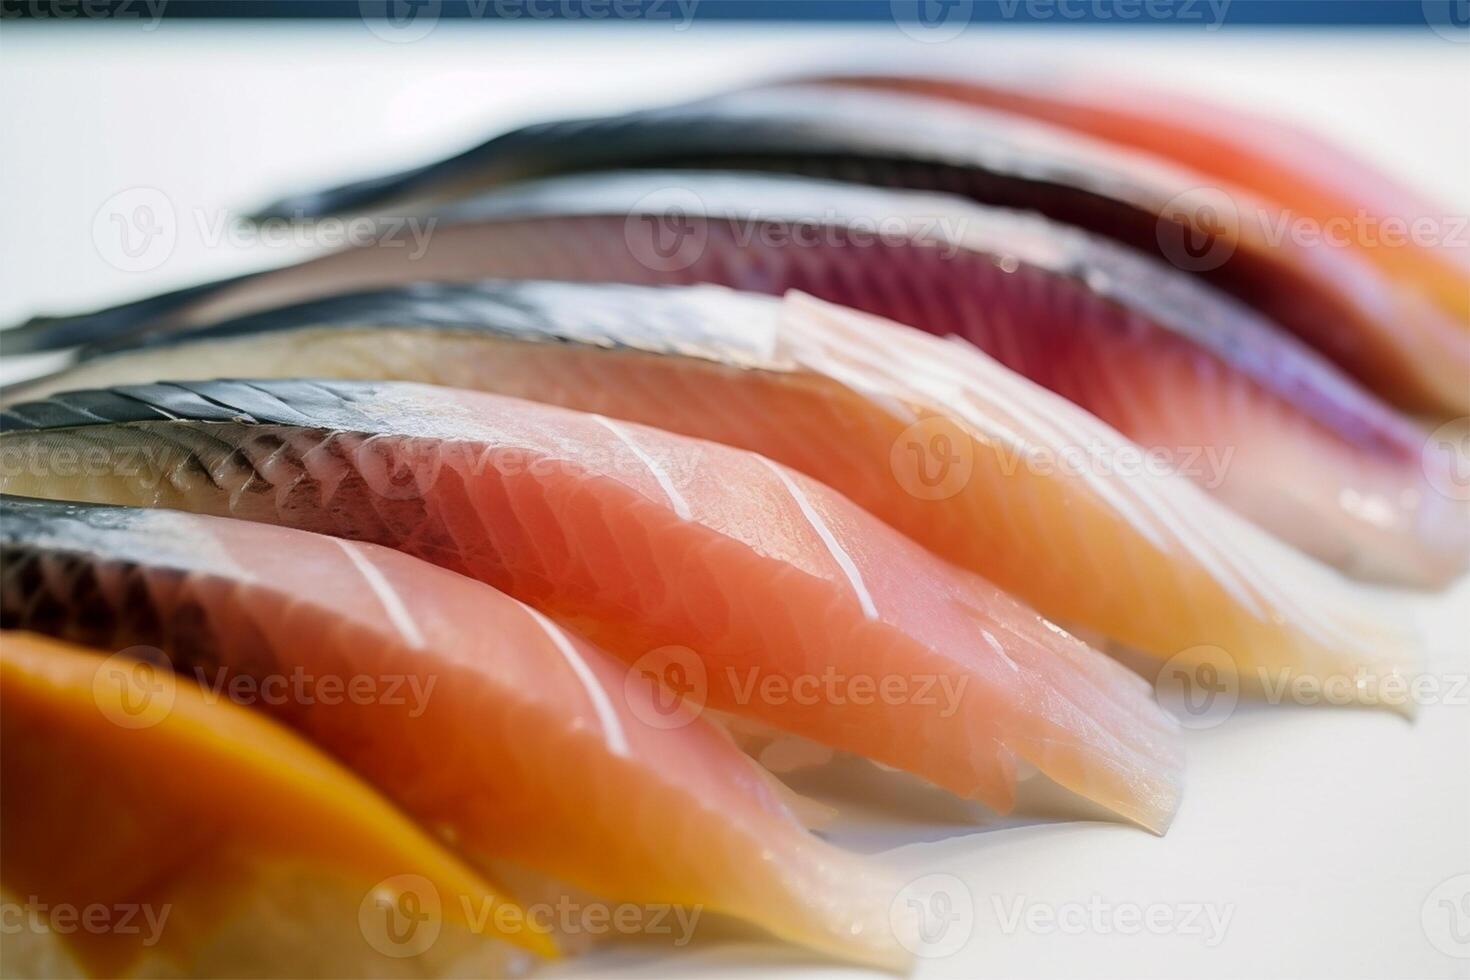 Japans sashimi, rauw vis vlees gesneden in stukken. generatief ai. foto